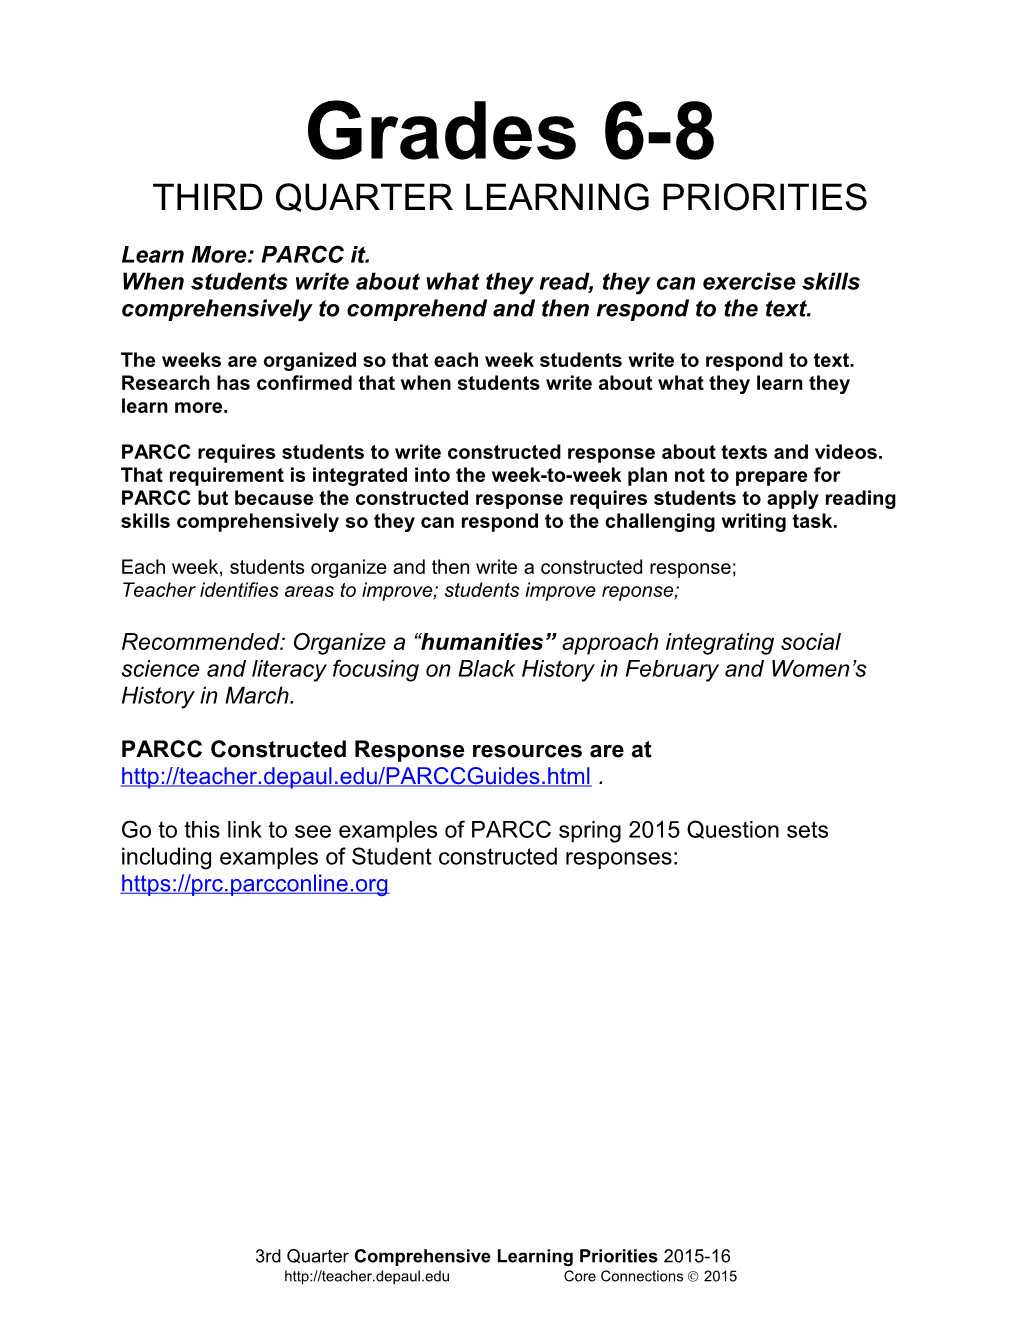 Third Quarter Learning Priorities